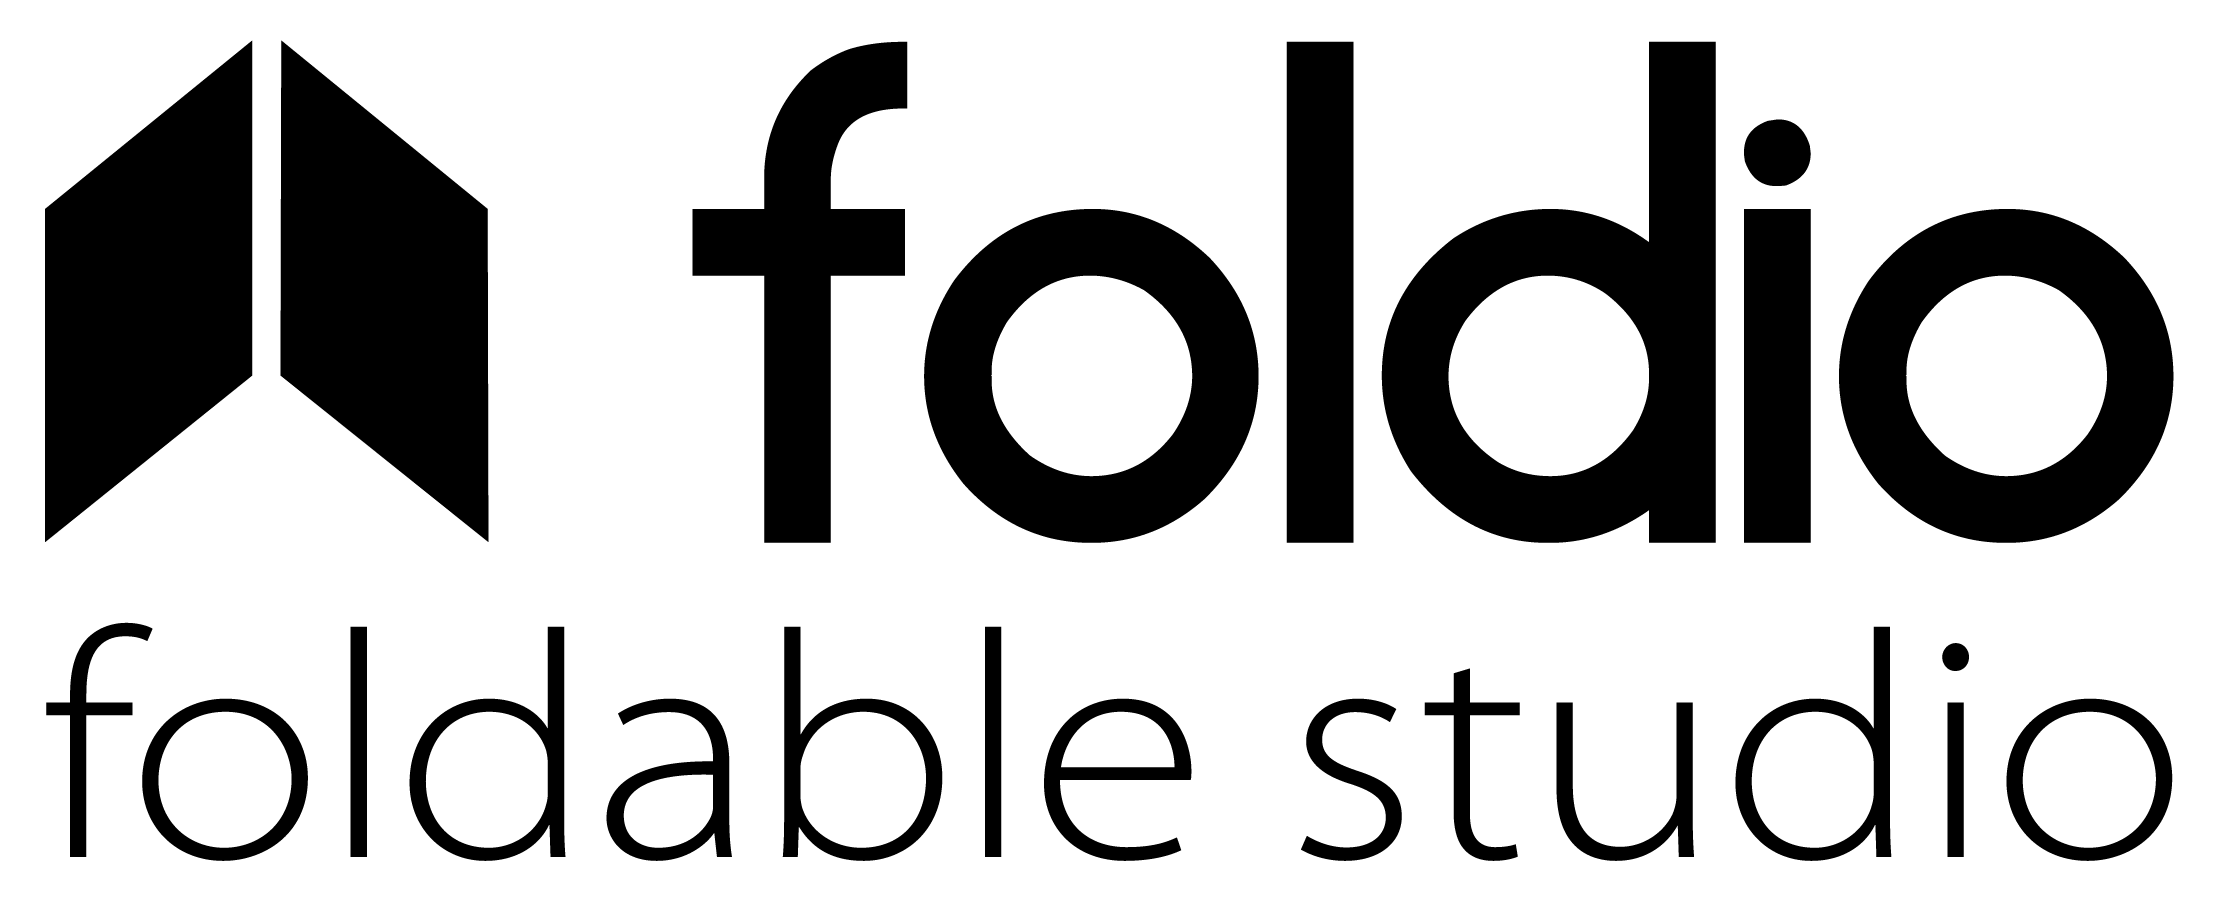 Foldio logo